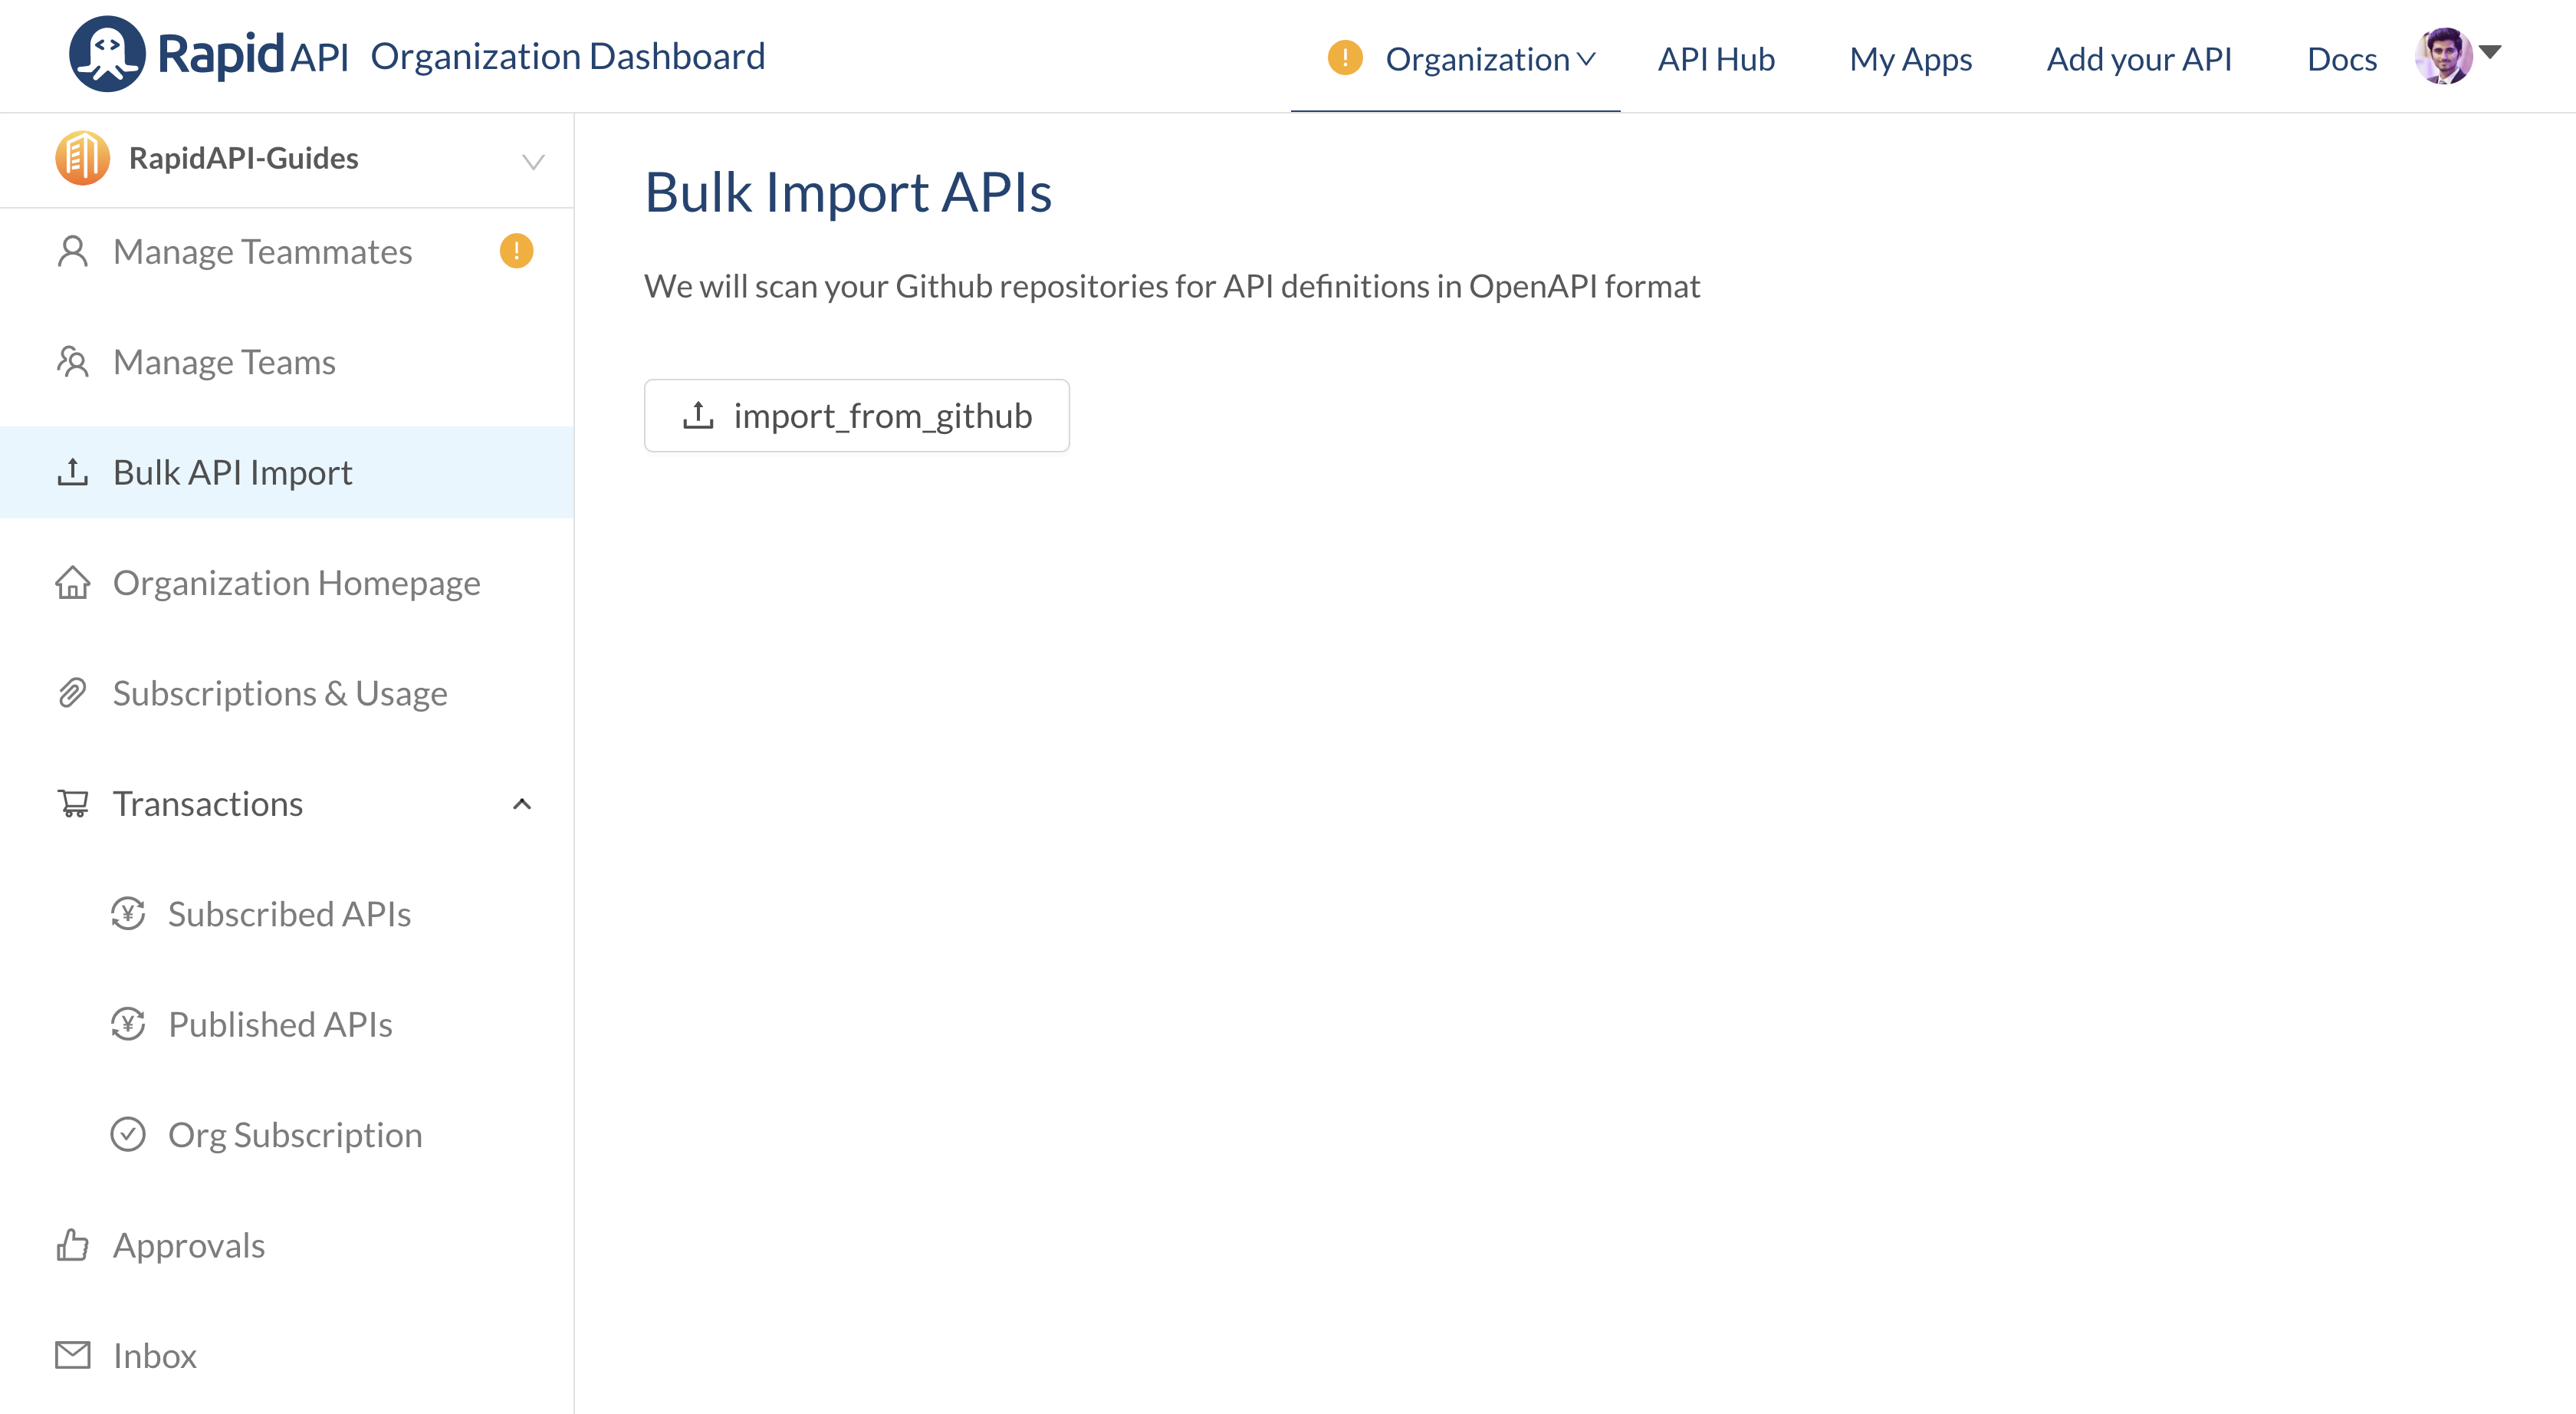 Built Import APIs